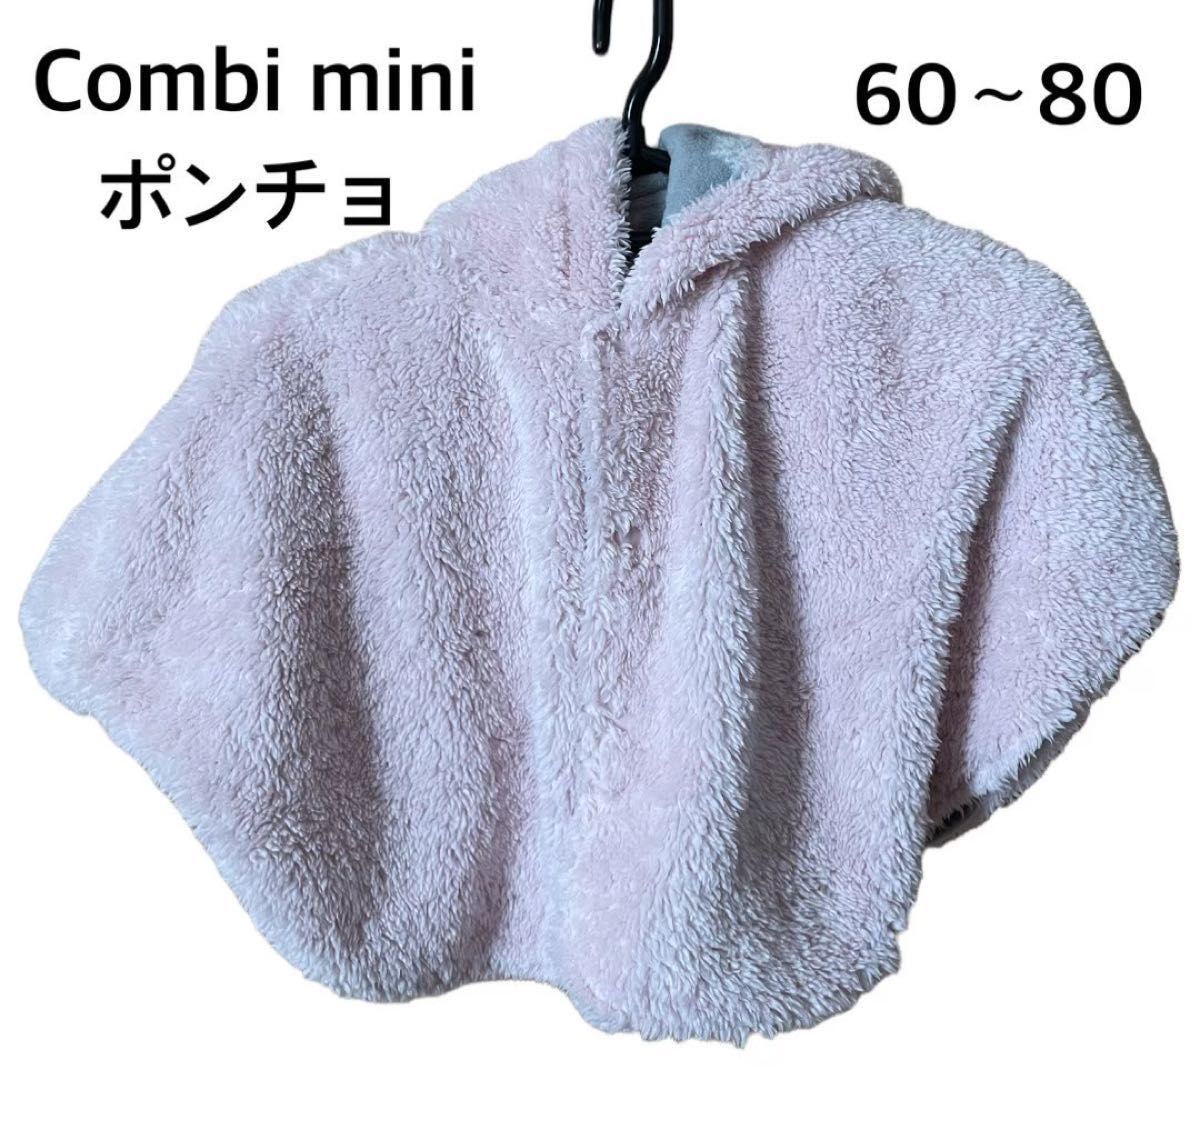 Combi mini ポンチョ ピンク 60〜80 ケープコート